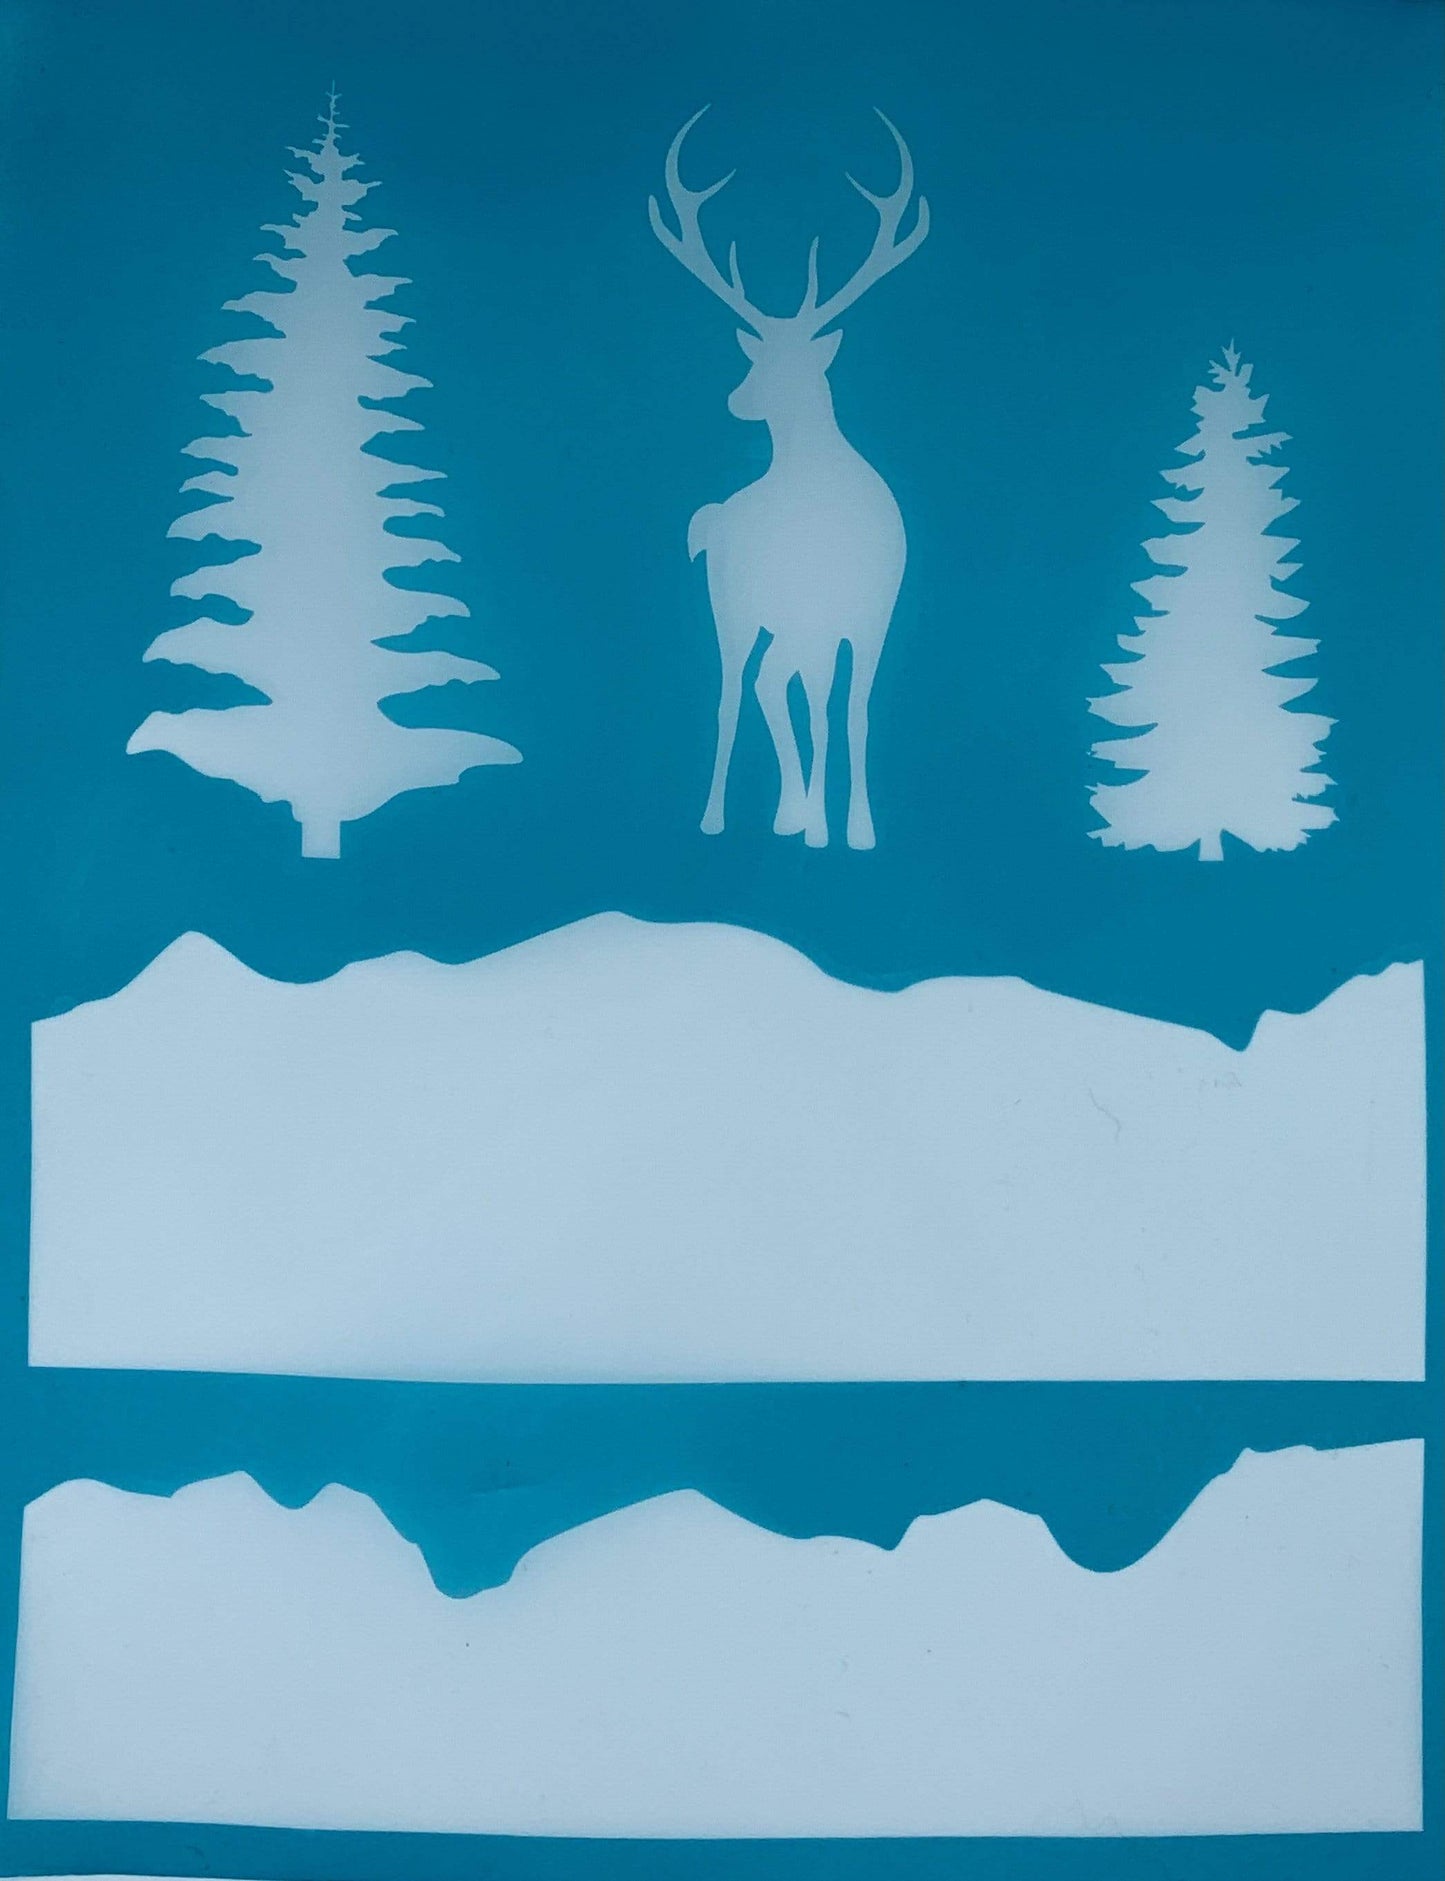 Spruce Trees, Hills, & Deer Silk Screen